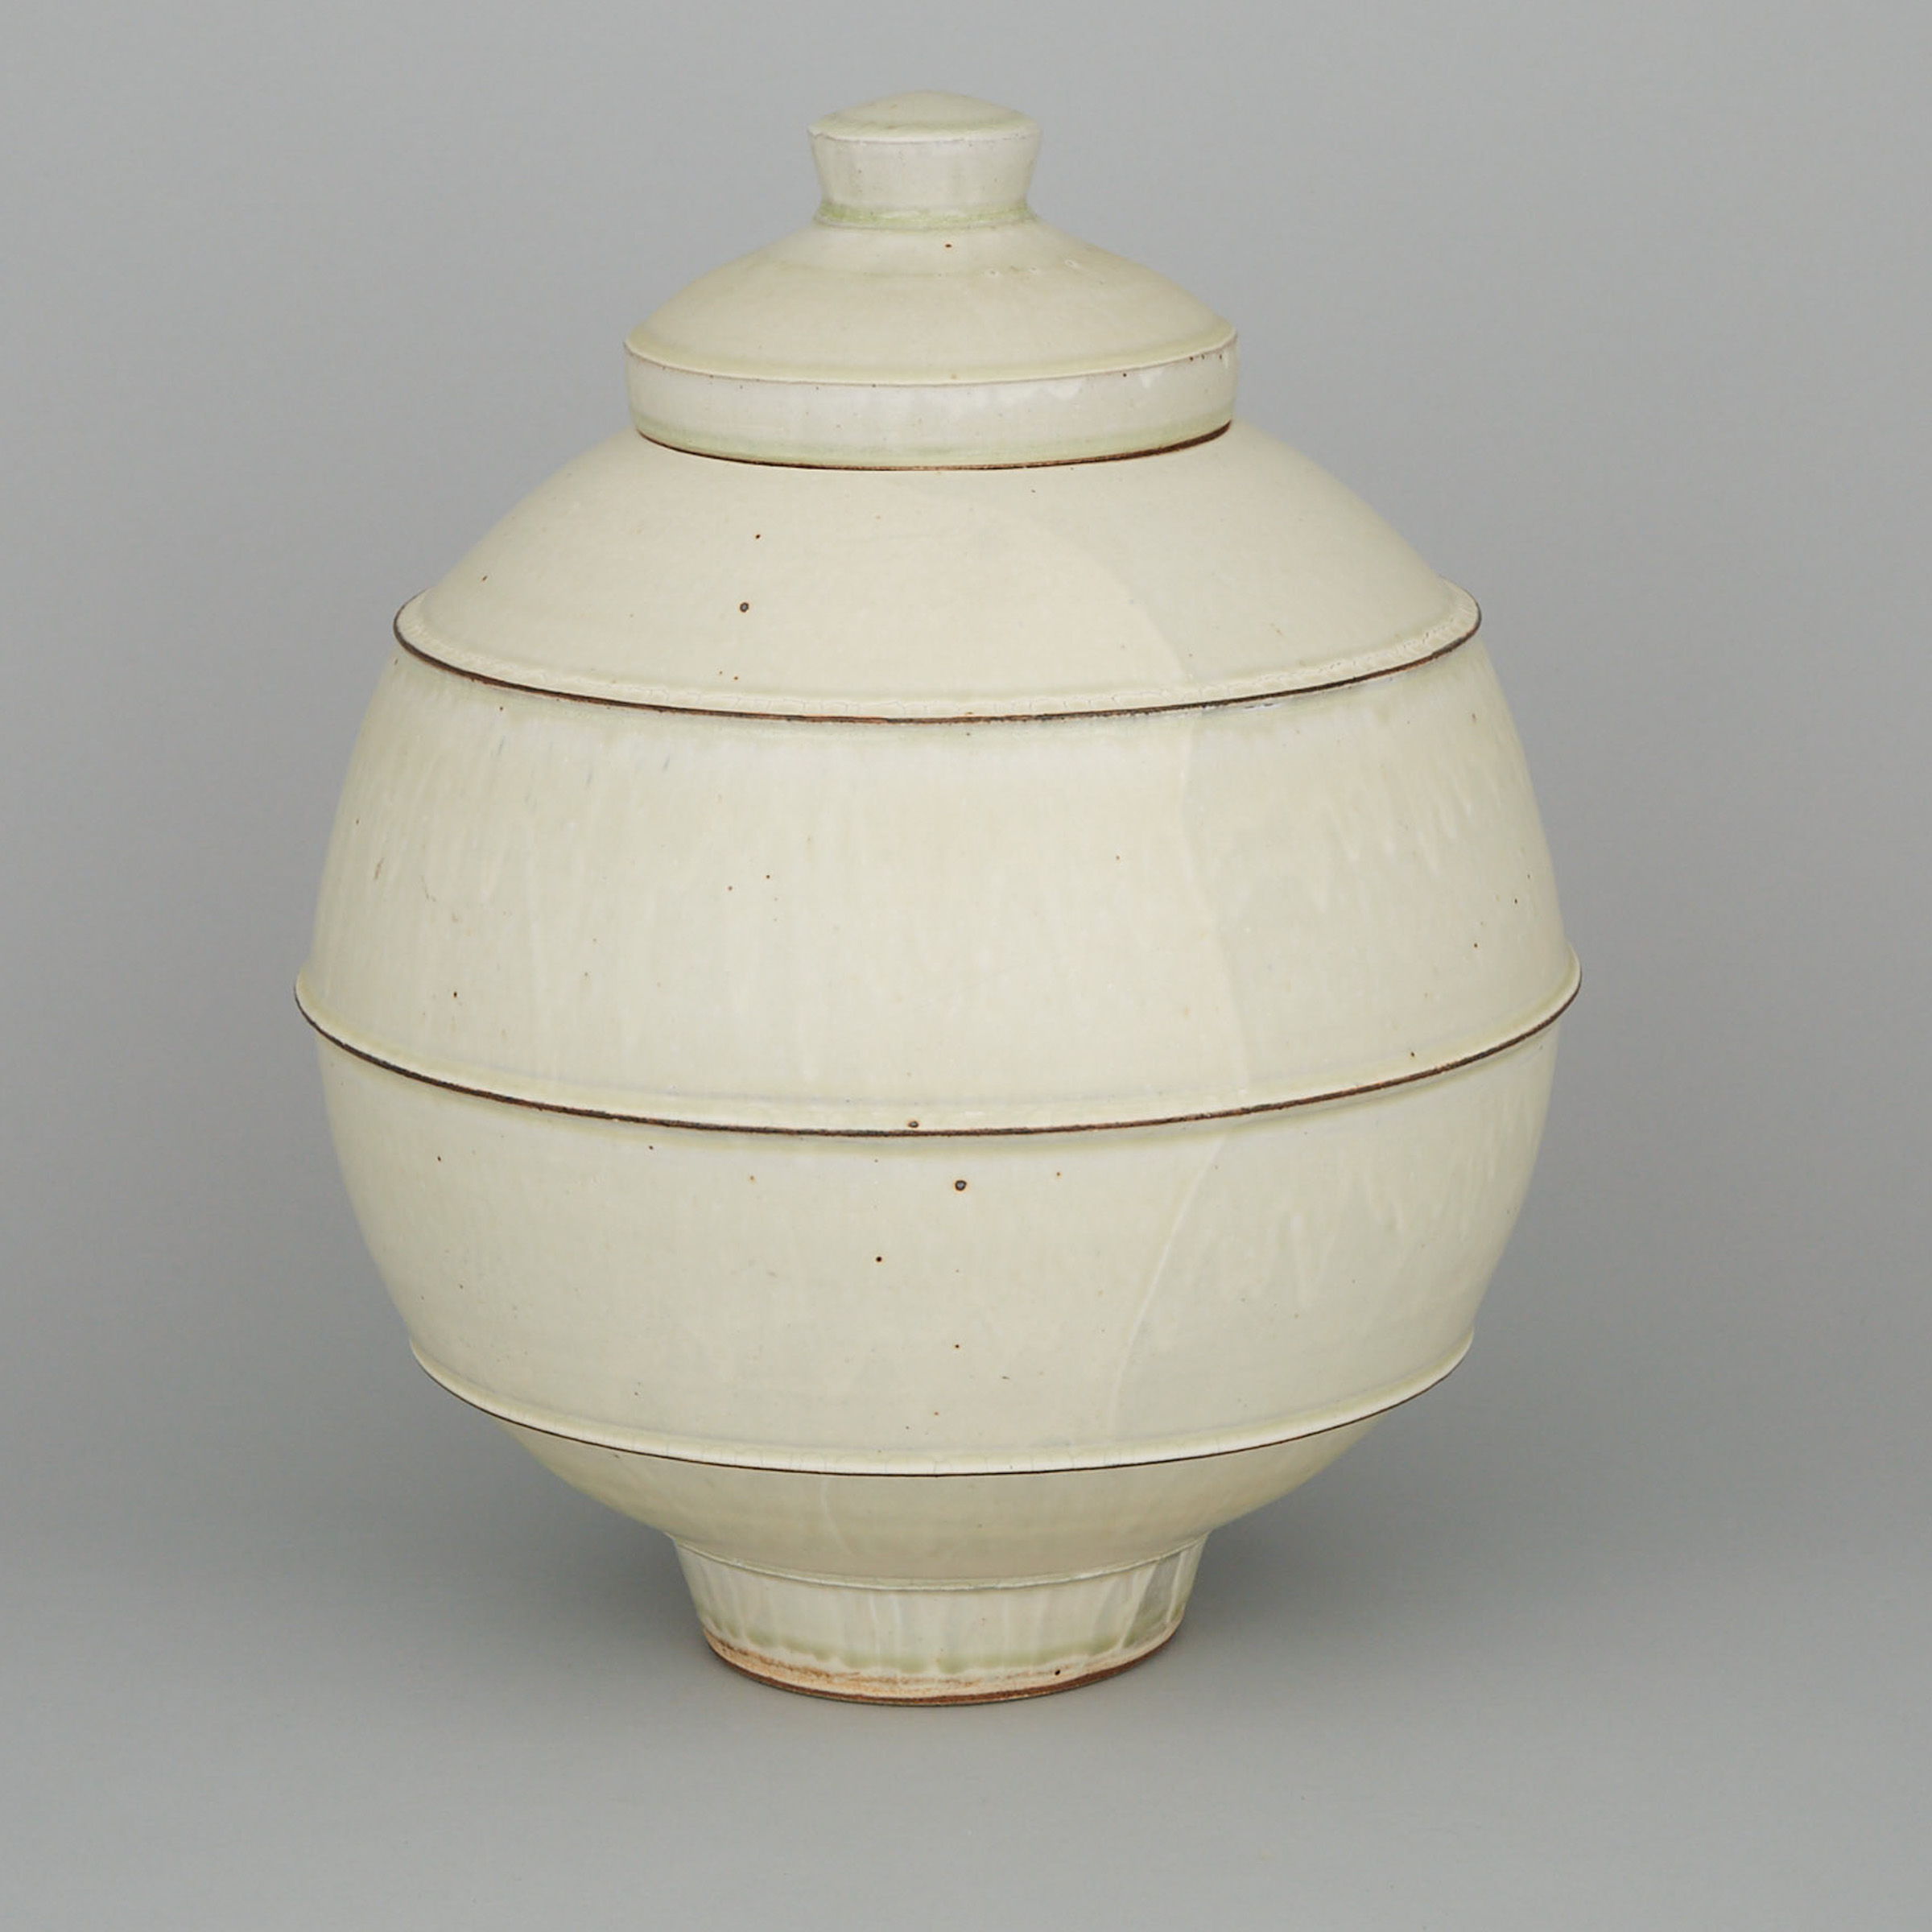 Bruce Cochrane (Canadian, b.1953), Stoneware Covered Jar, c.2015